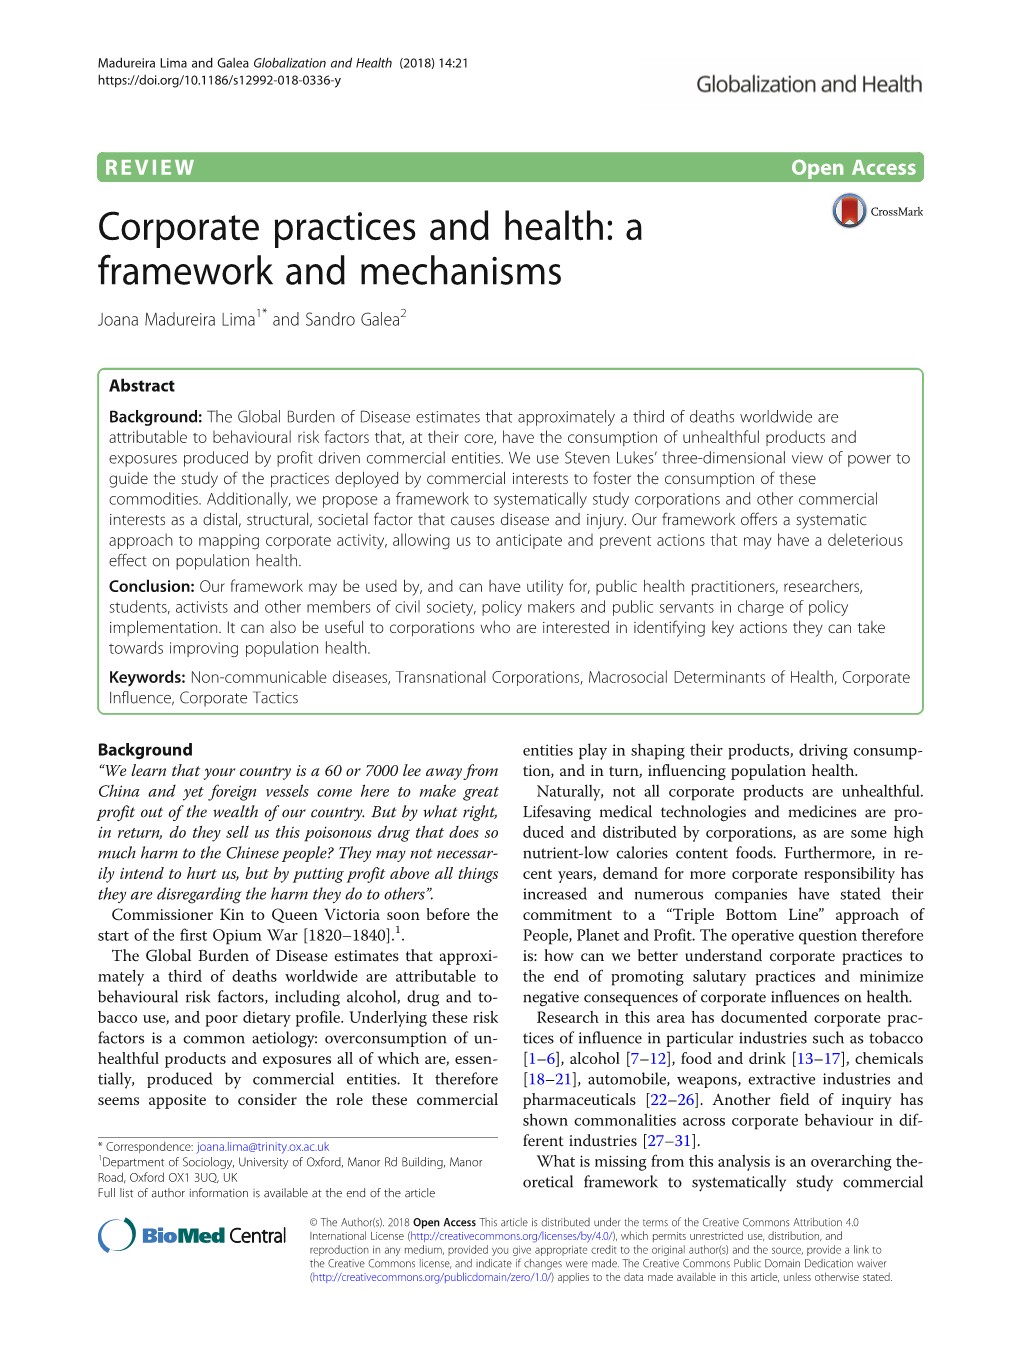 Corporate Practices and Health: a Framework and Mechanisms Joana Madureira Lima1* and Sandro Galea2